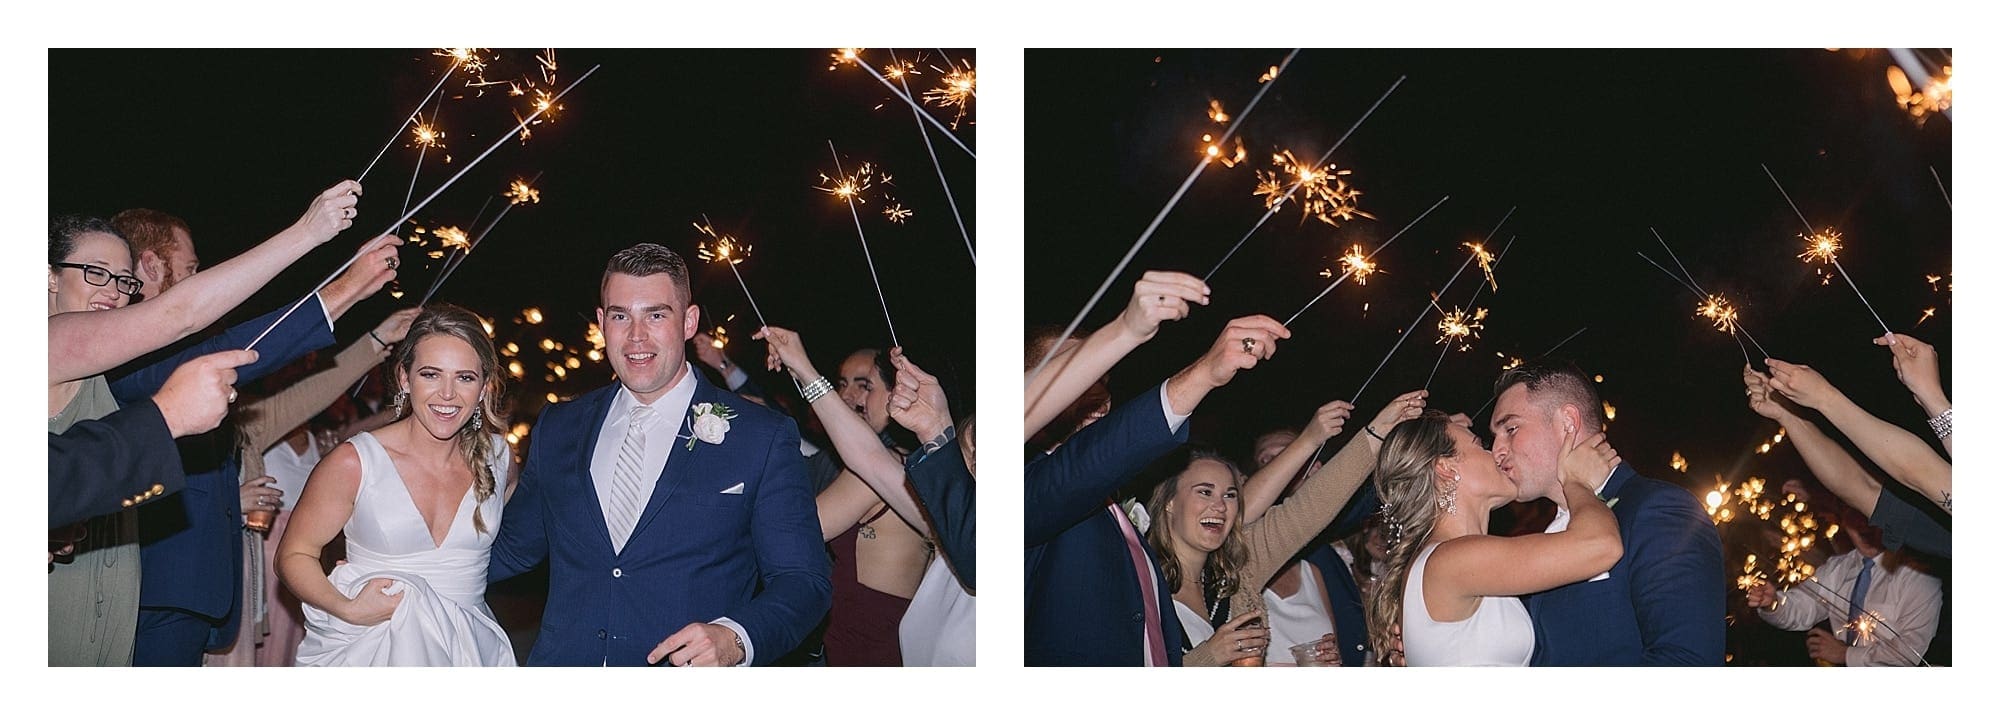 Bride and groom leaving wedding reception at night underneath sparkler send off